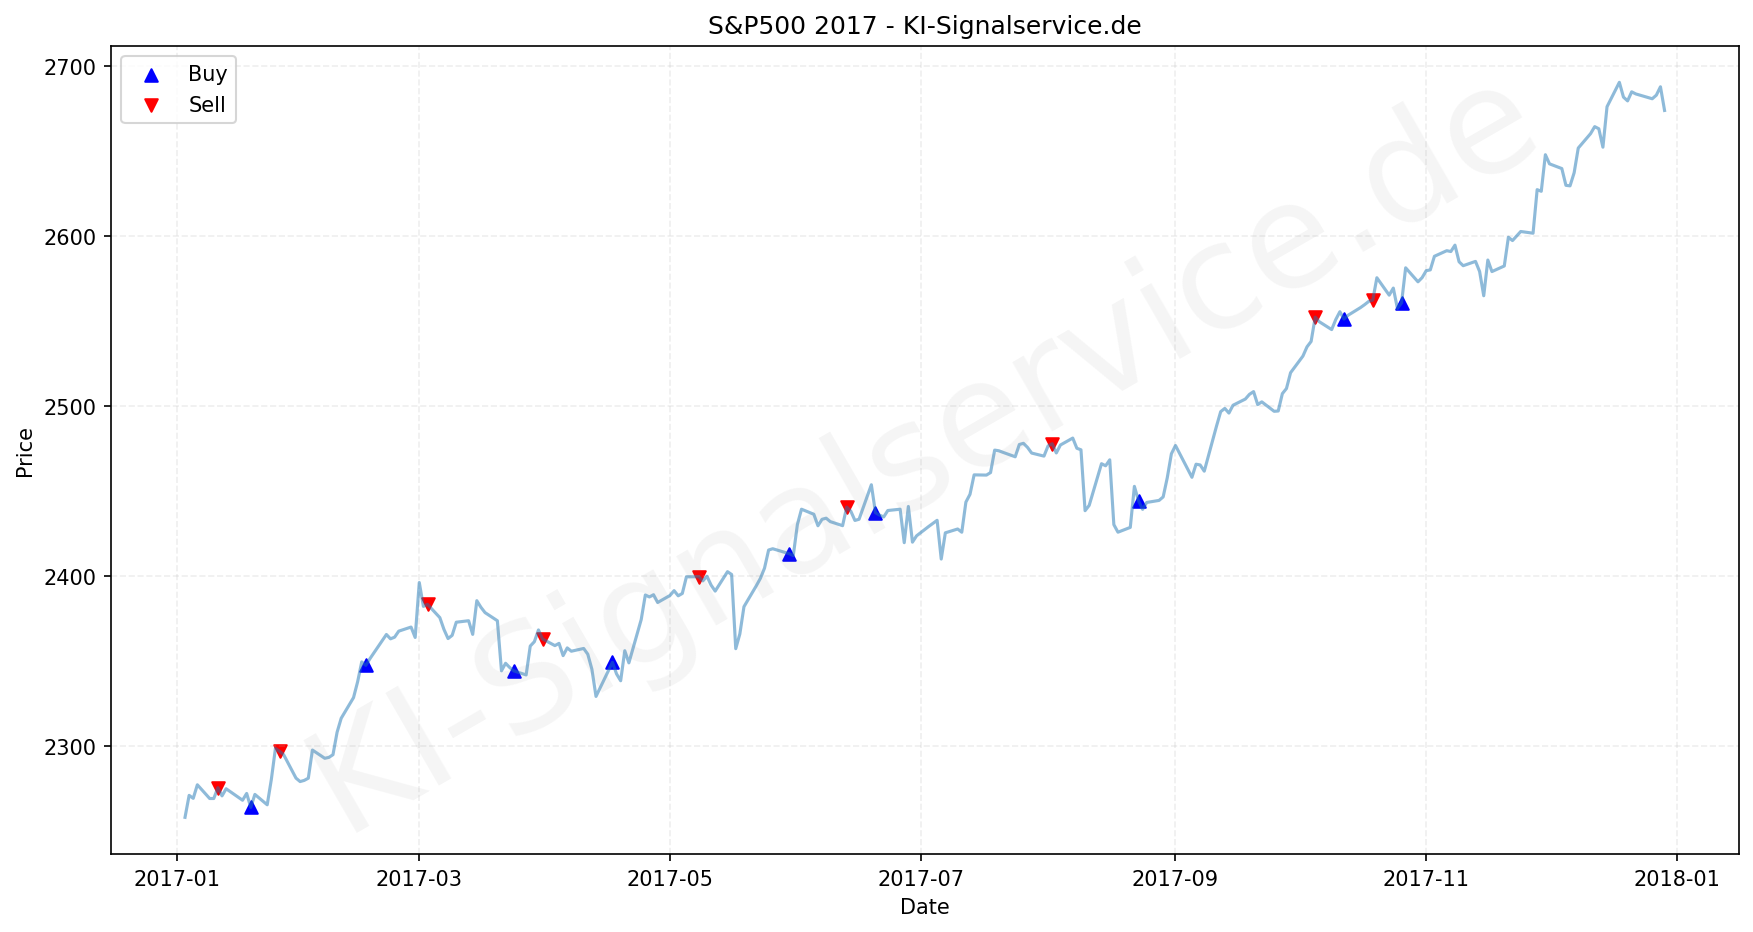 SP500 Index Performance Chart - KI Tradingsignale 2017